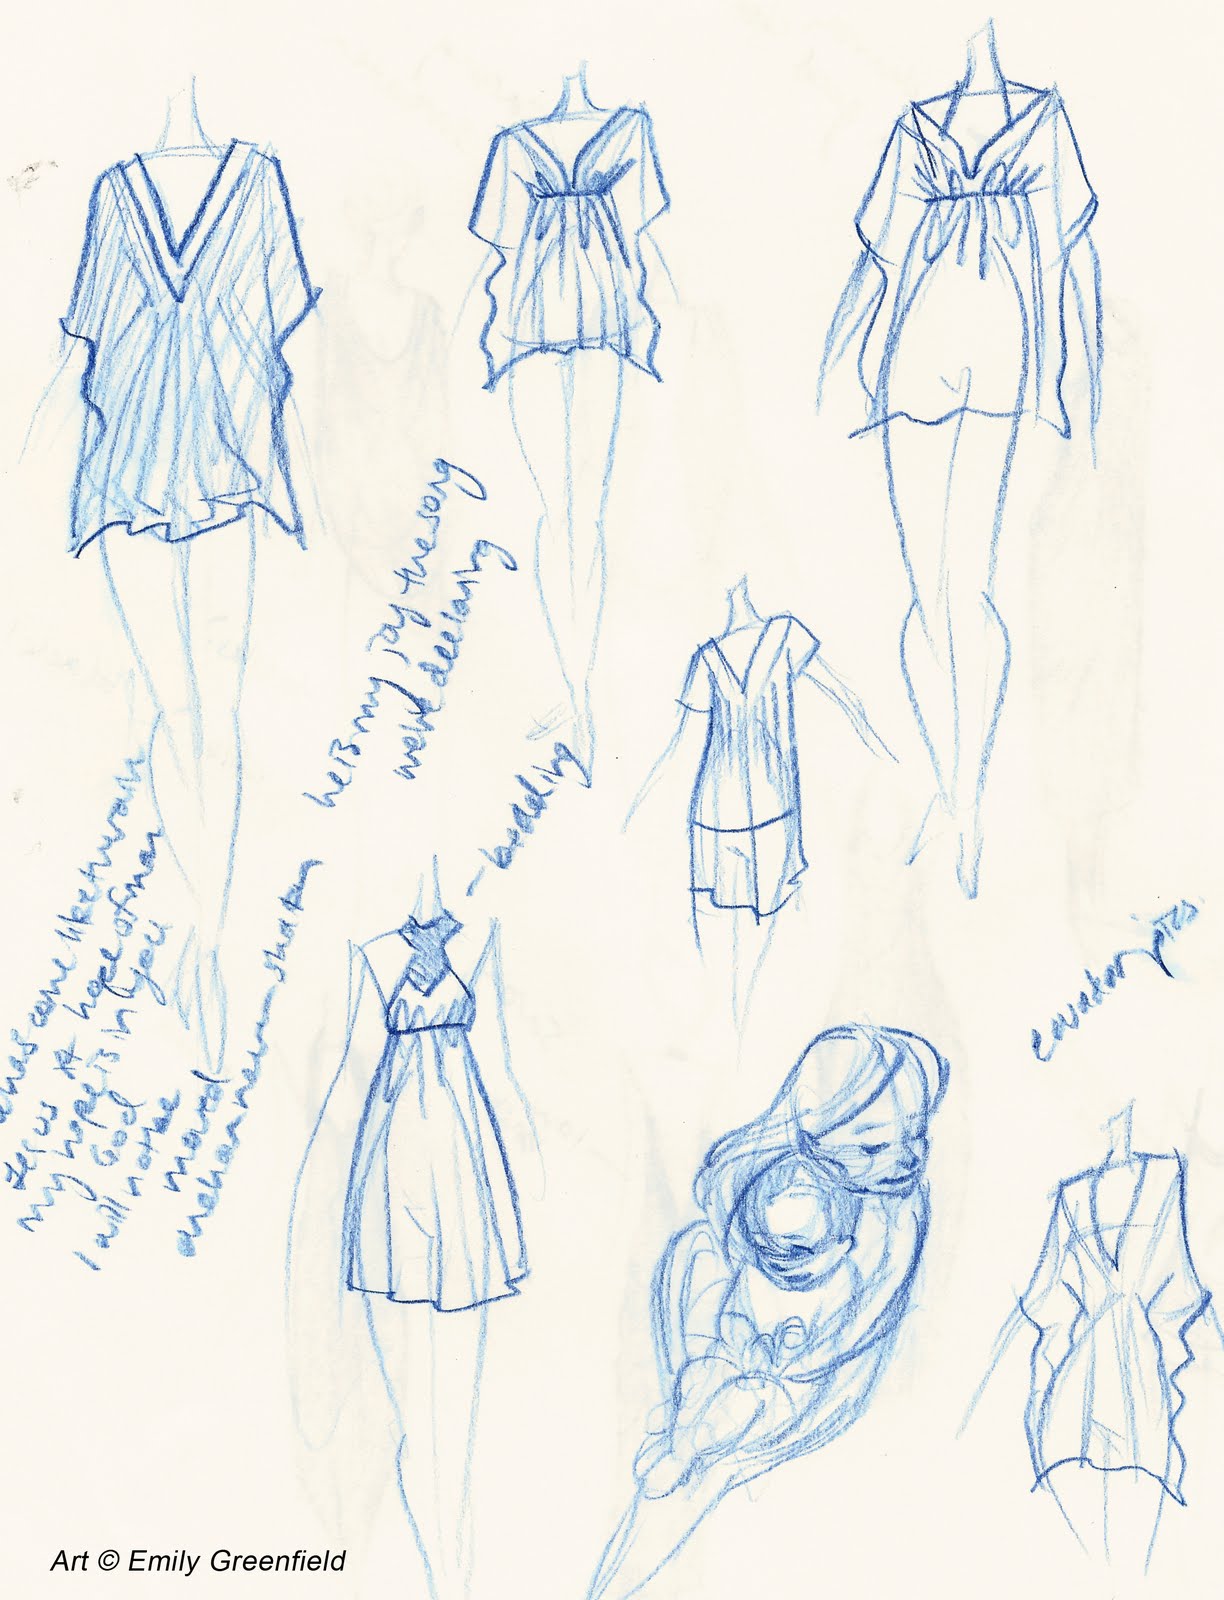 Emily's Sketchblog: Sketchbook: Church and fashion!